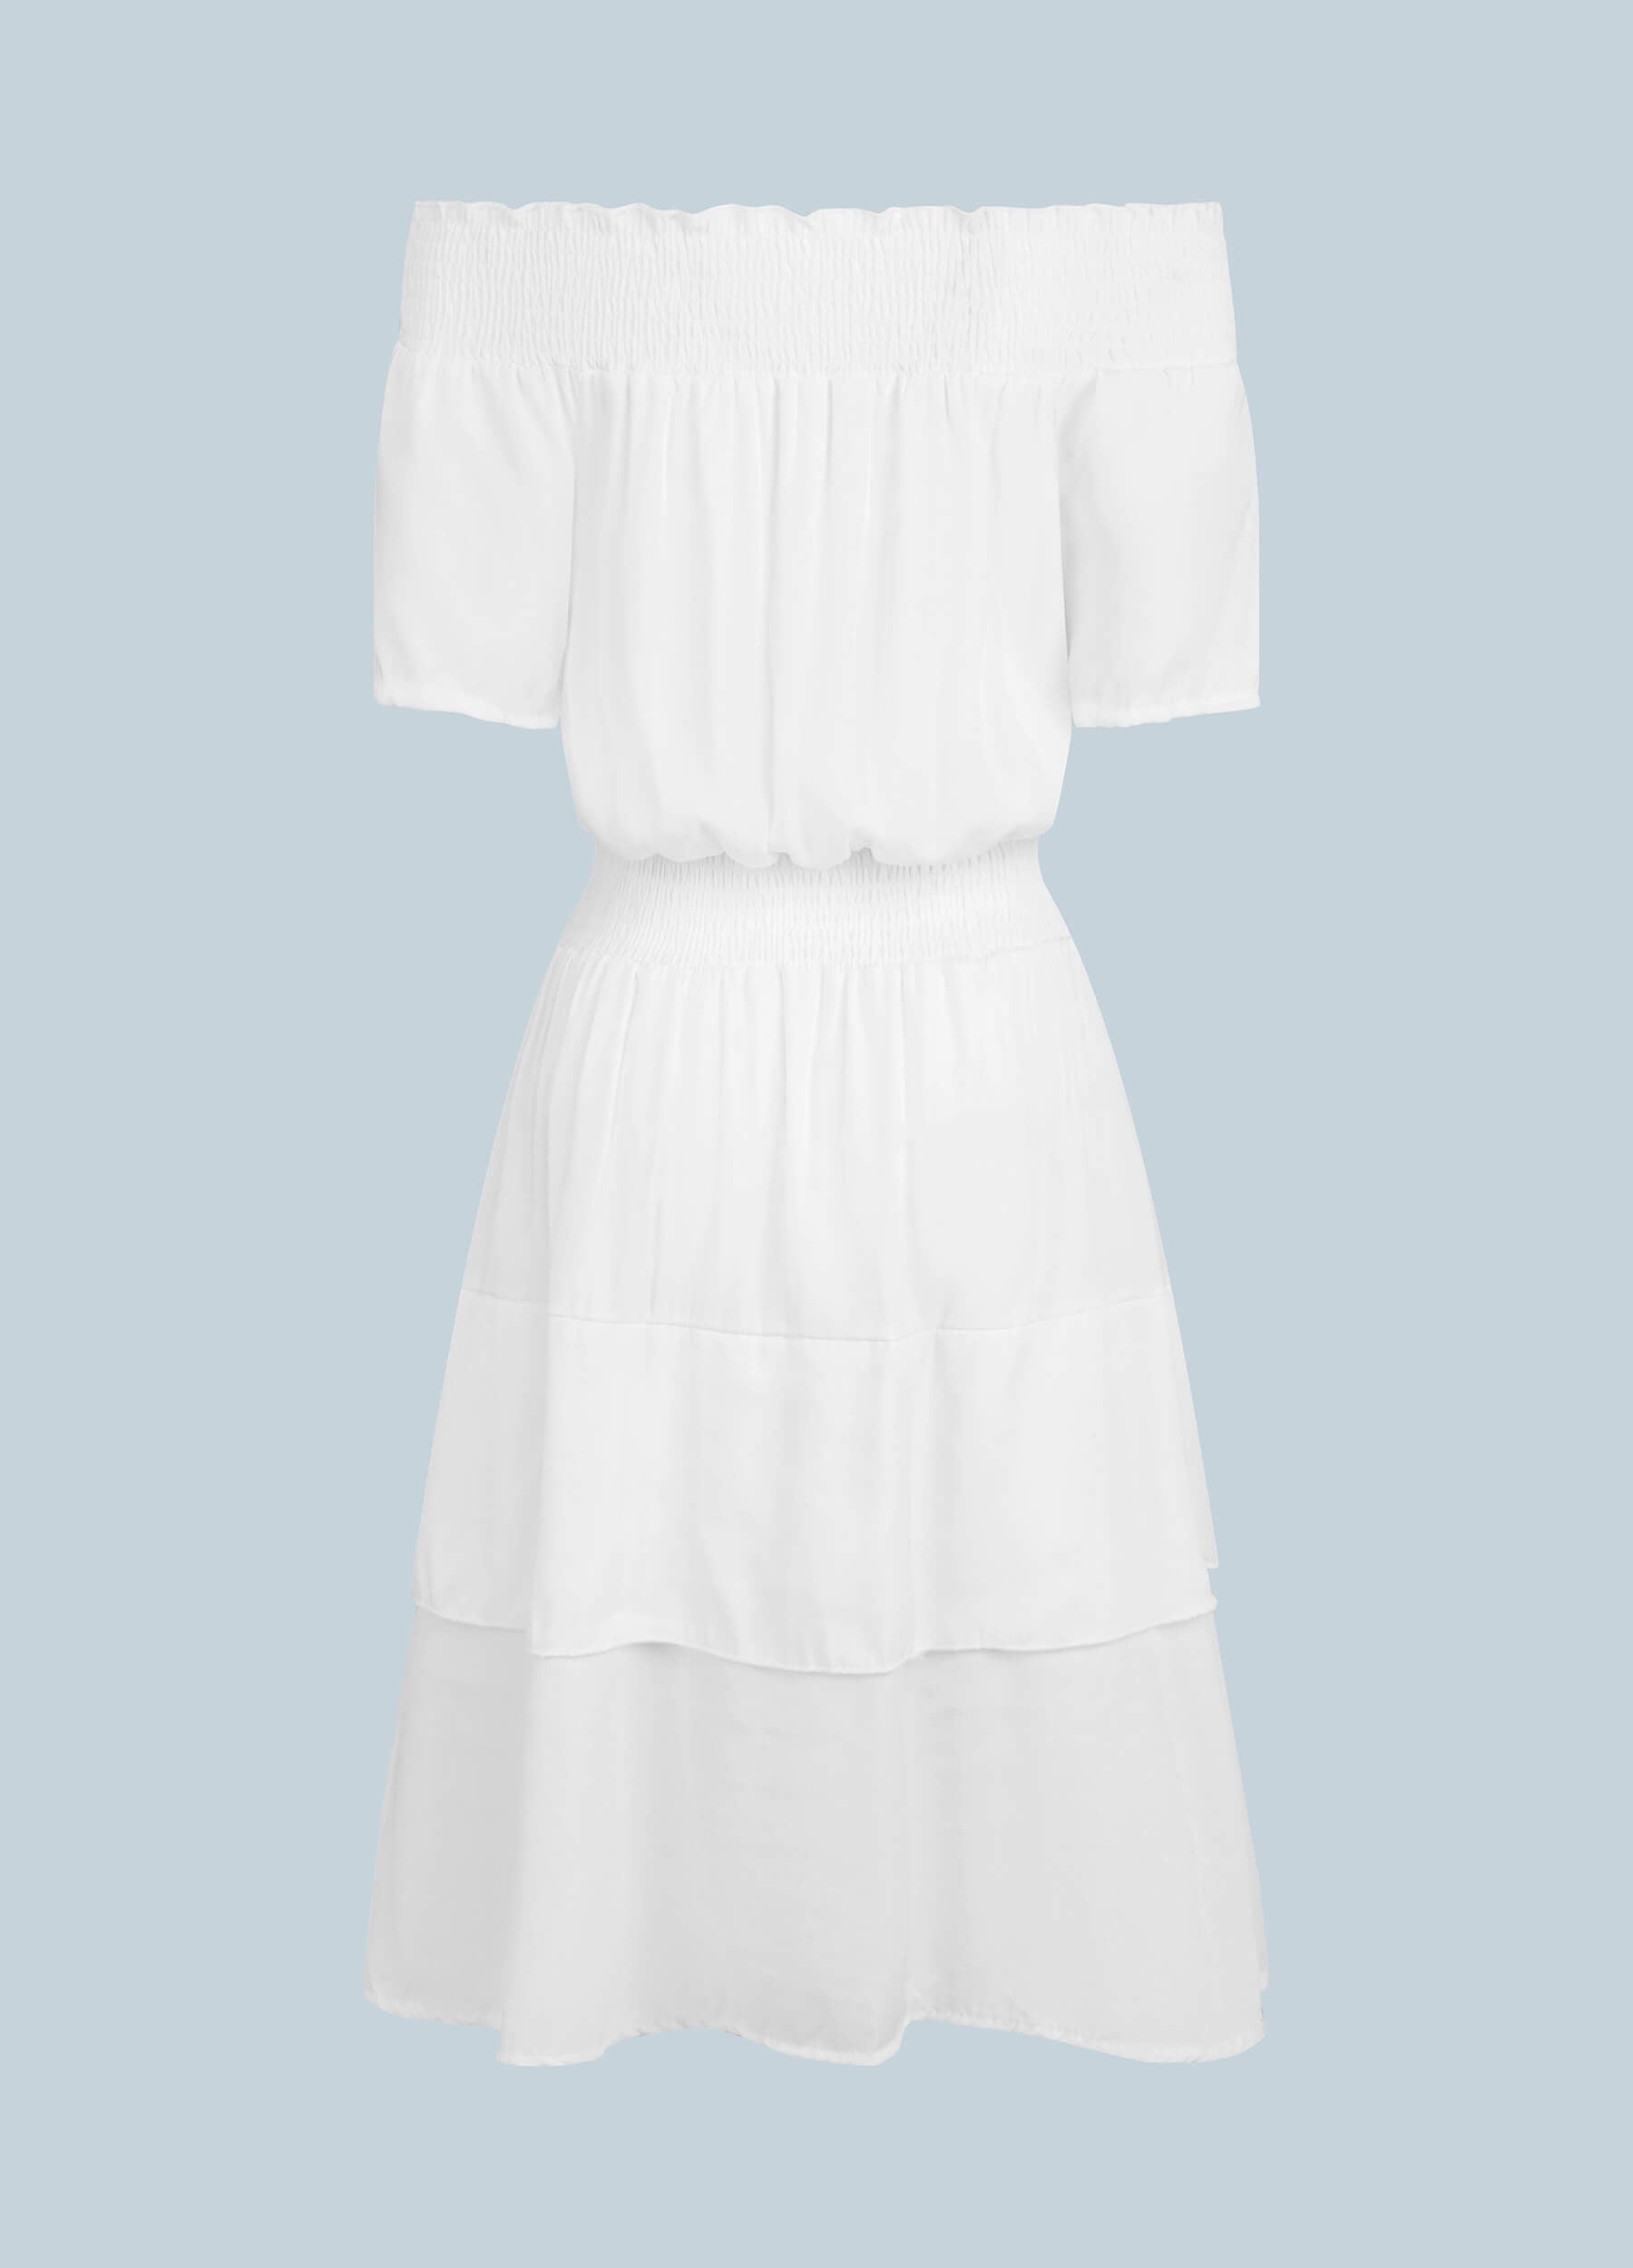 Women's Summer Off Shoulder Ruffle Trims Layered Hem Solid Dress-White back view